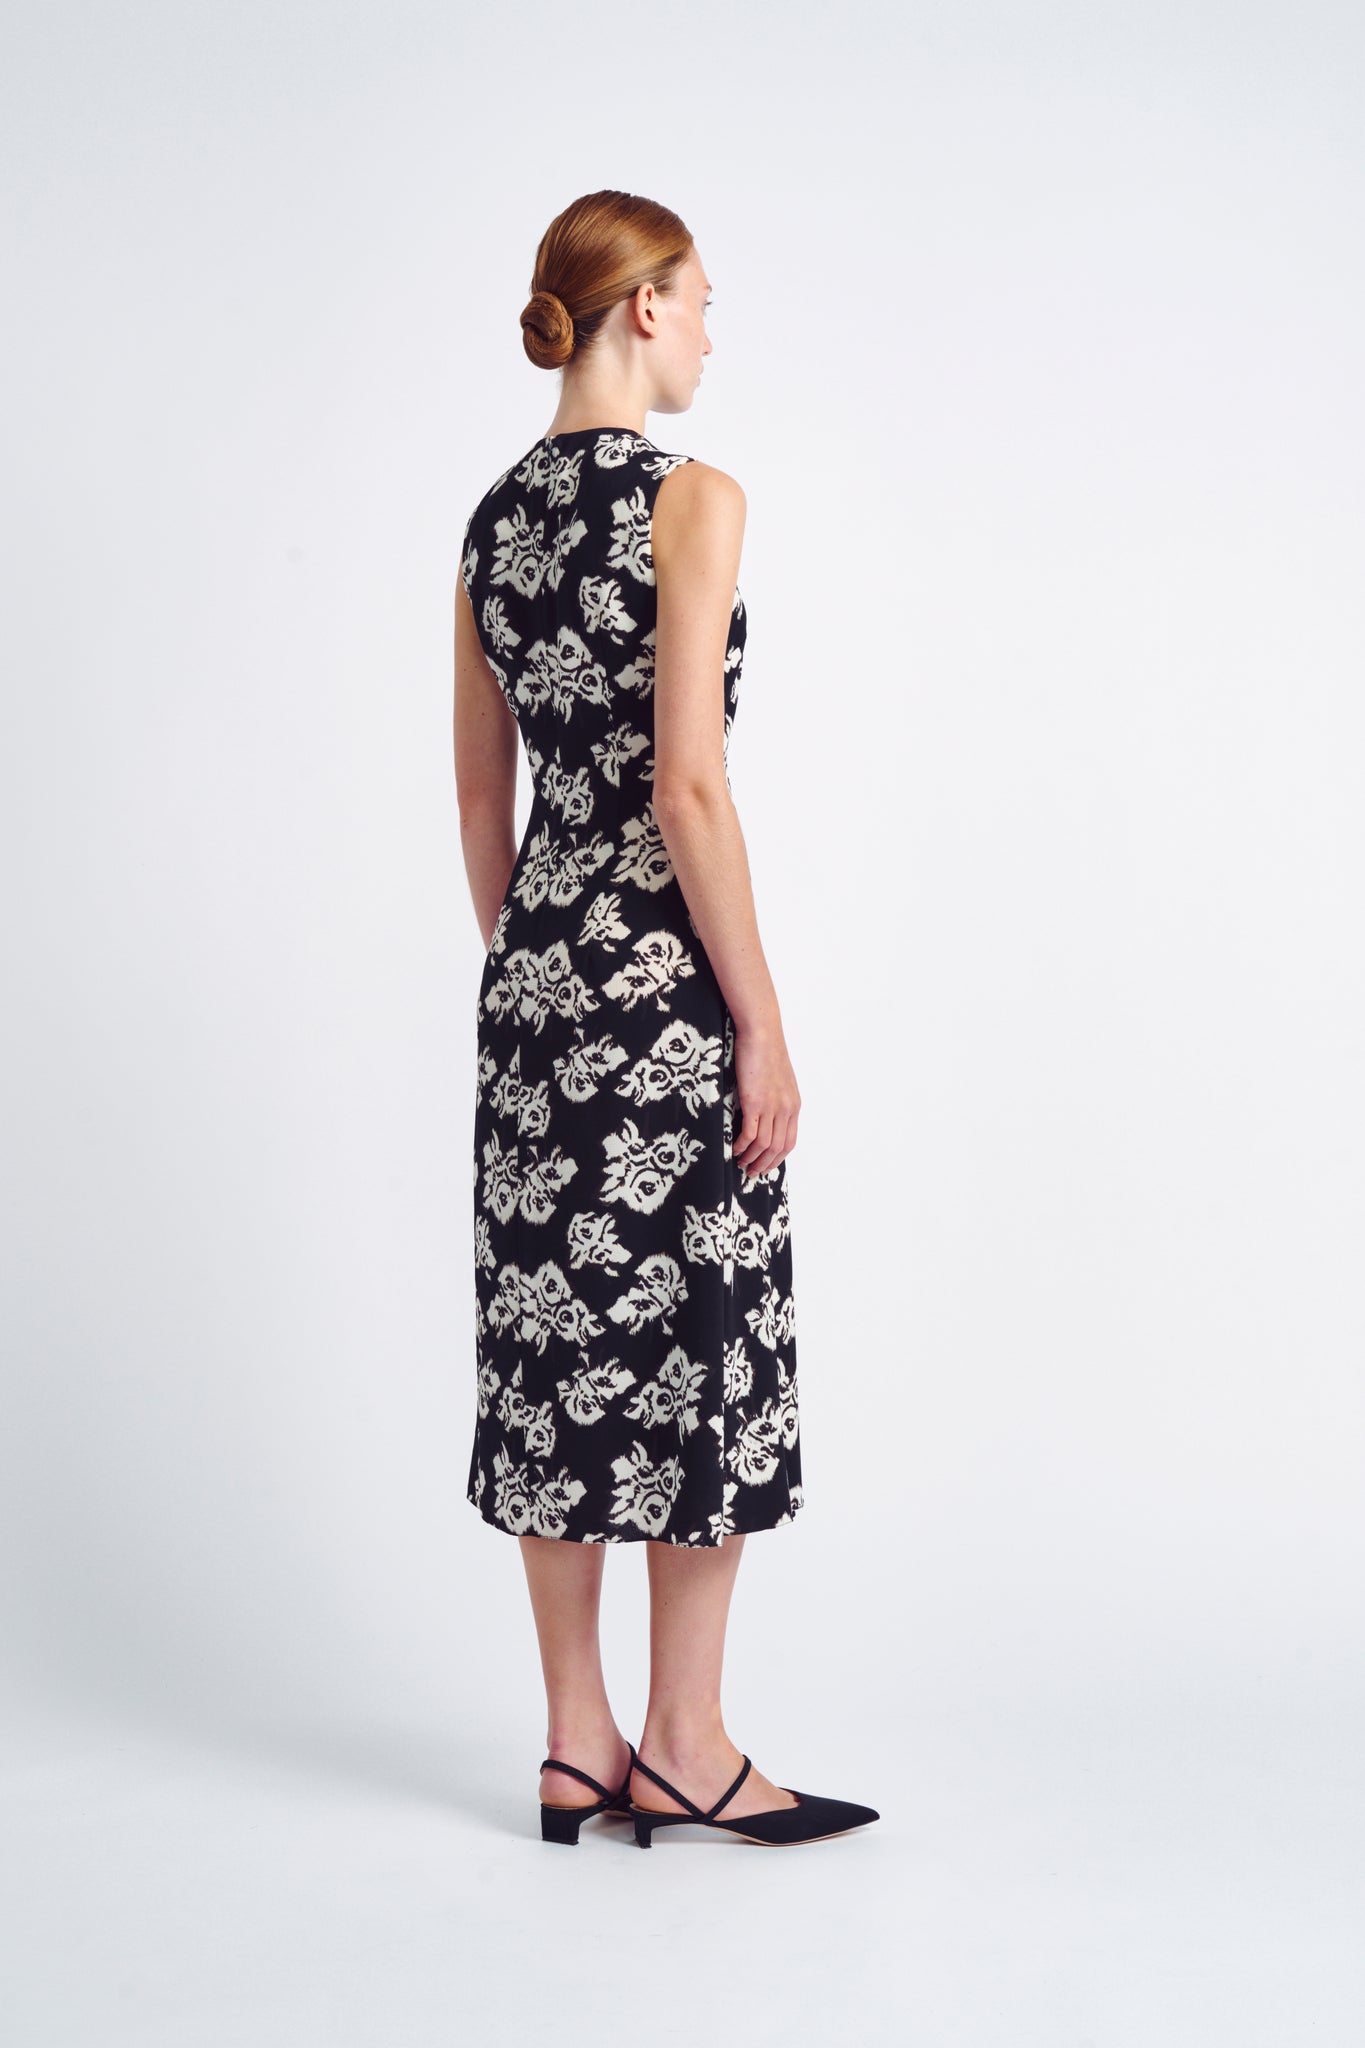 Ottilie Dress | Black and White Floral Printed Sleeveless Dress | Emilia Wickstead